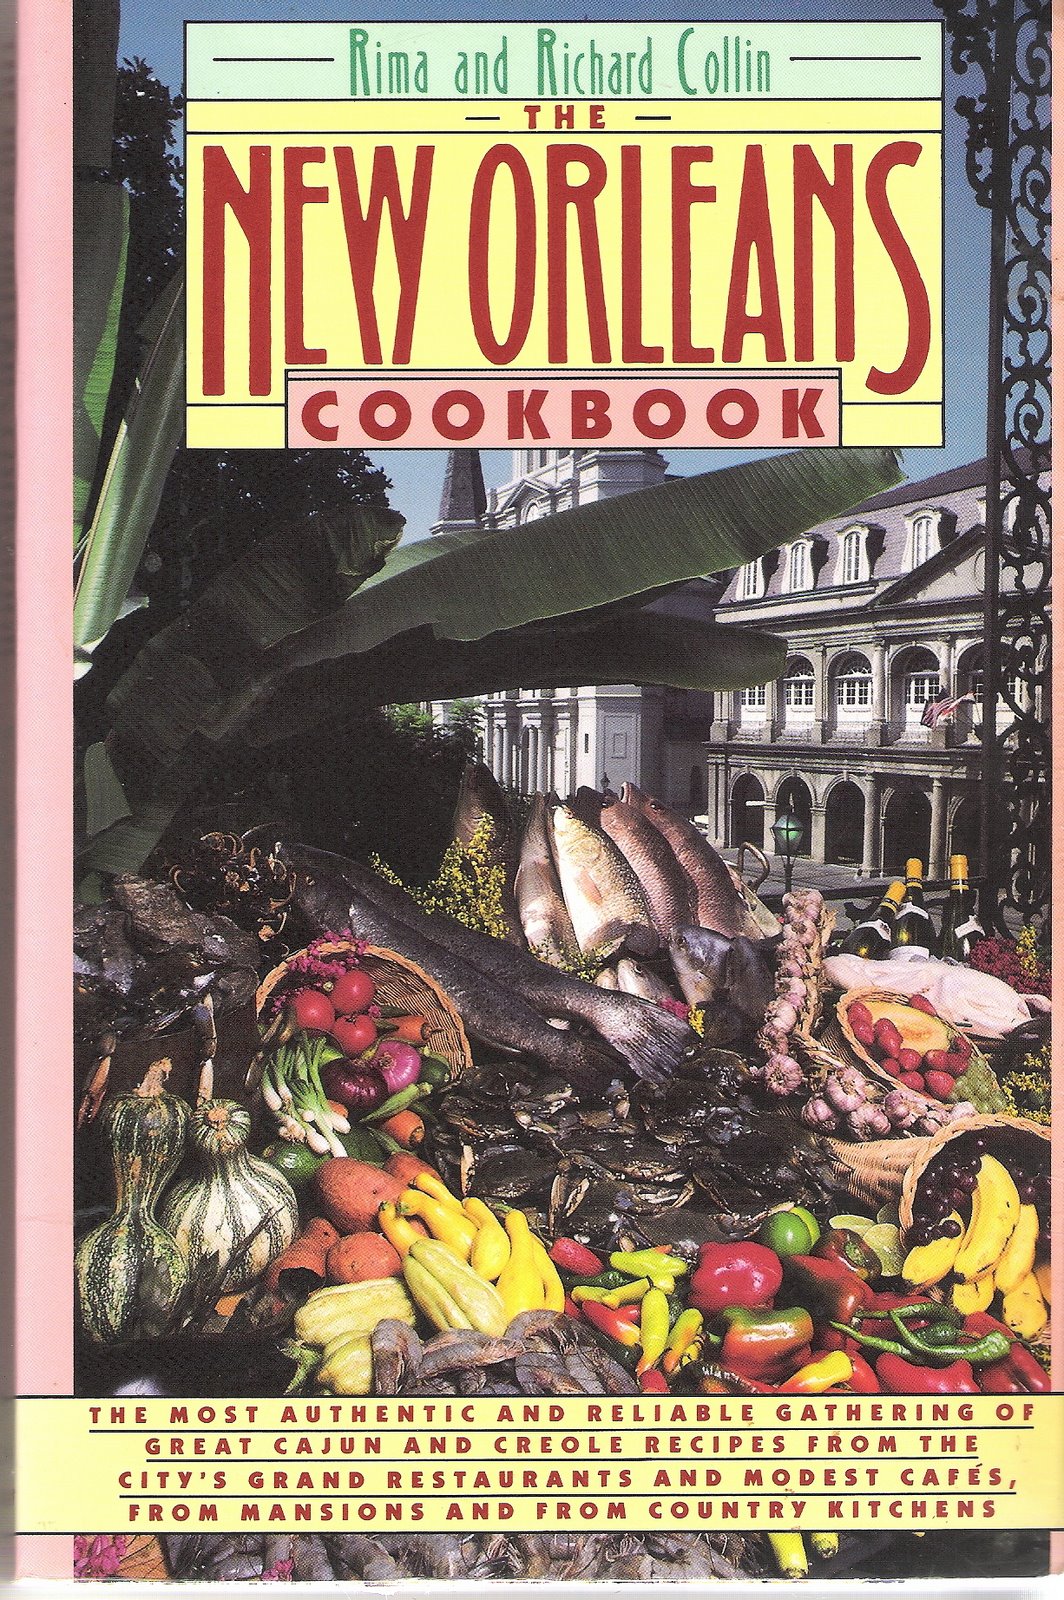 [cookbookcover1.jpg]